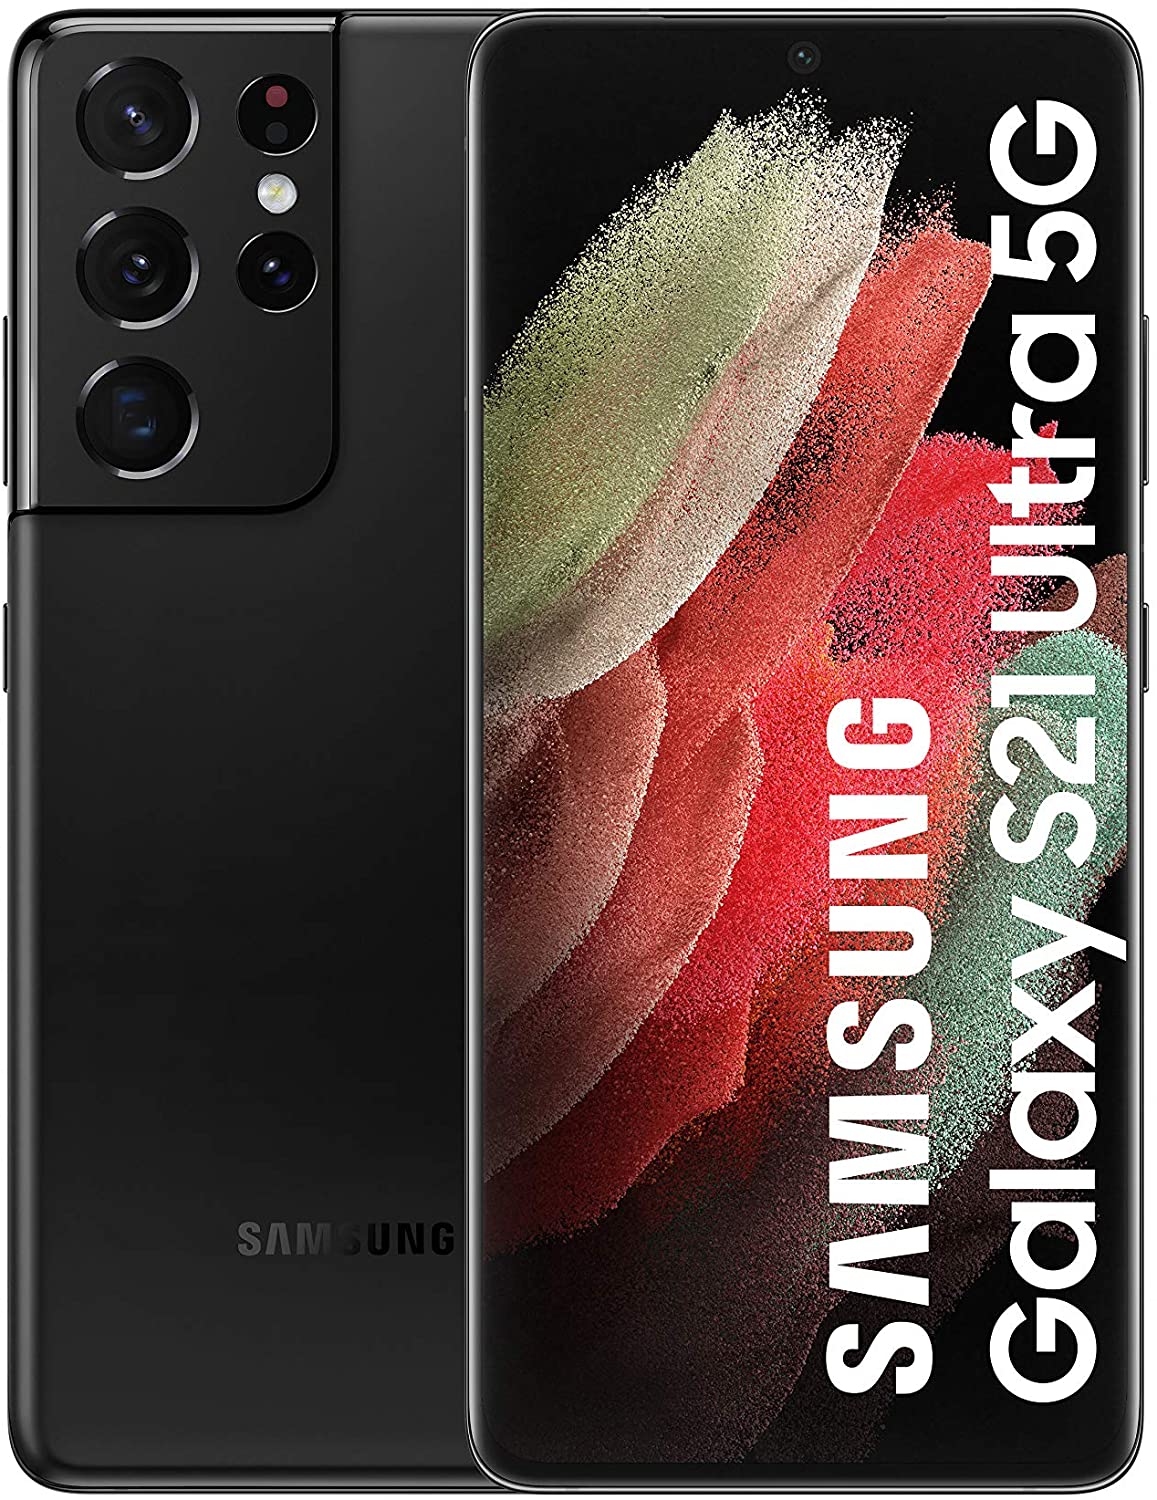 Samsung Galaxy S21 ULTRA BLACK